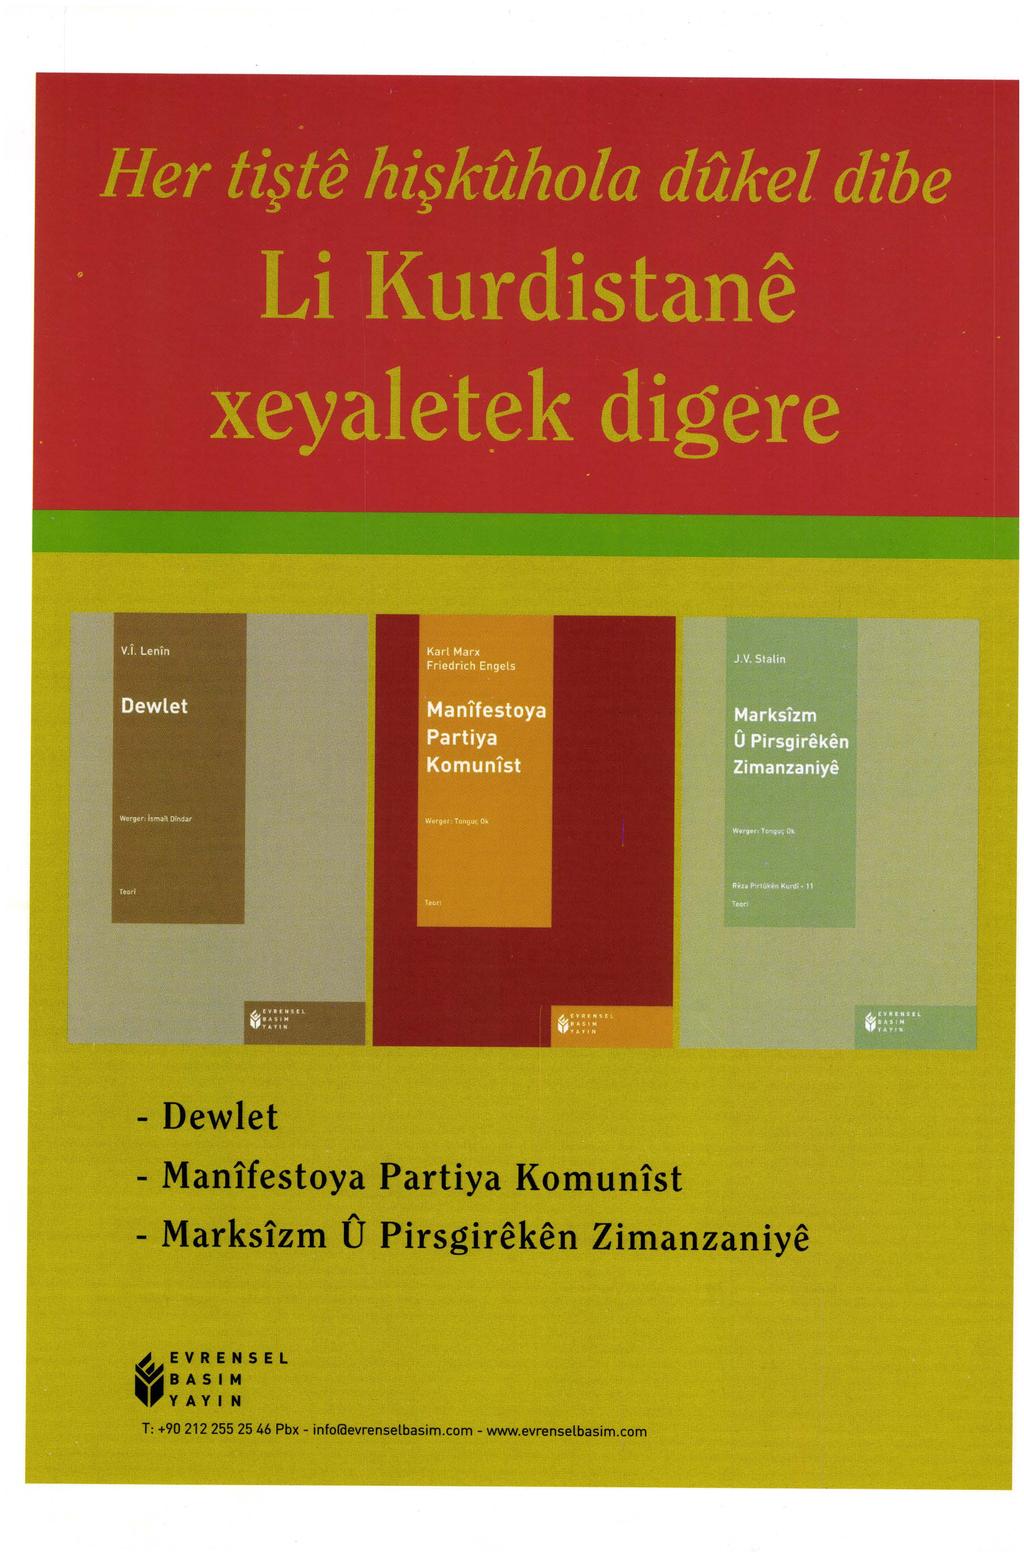 Her tişte hişkuhola dukel dibe Li Kurdistane xeyaletek digere - Dewlet - Manifestoya Partiya Komunist - Marksizm O